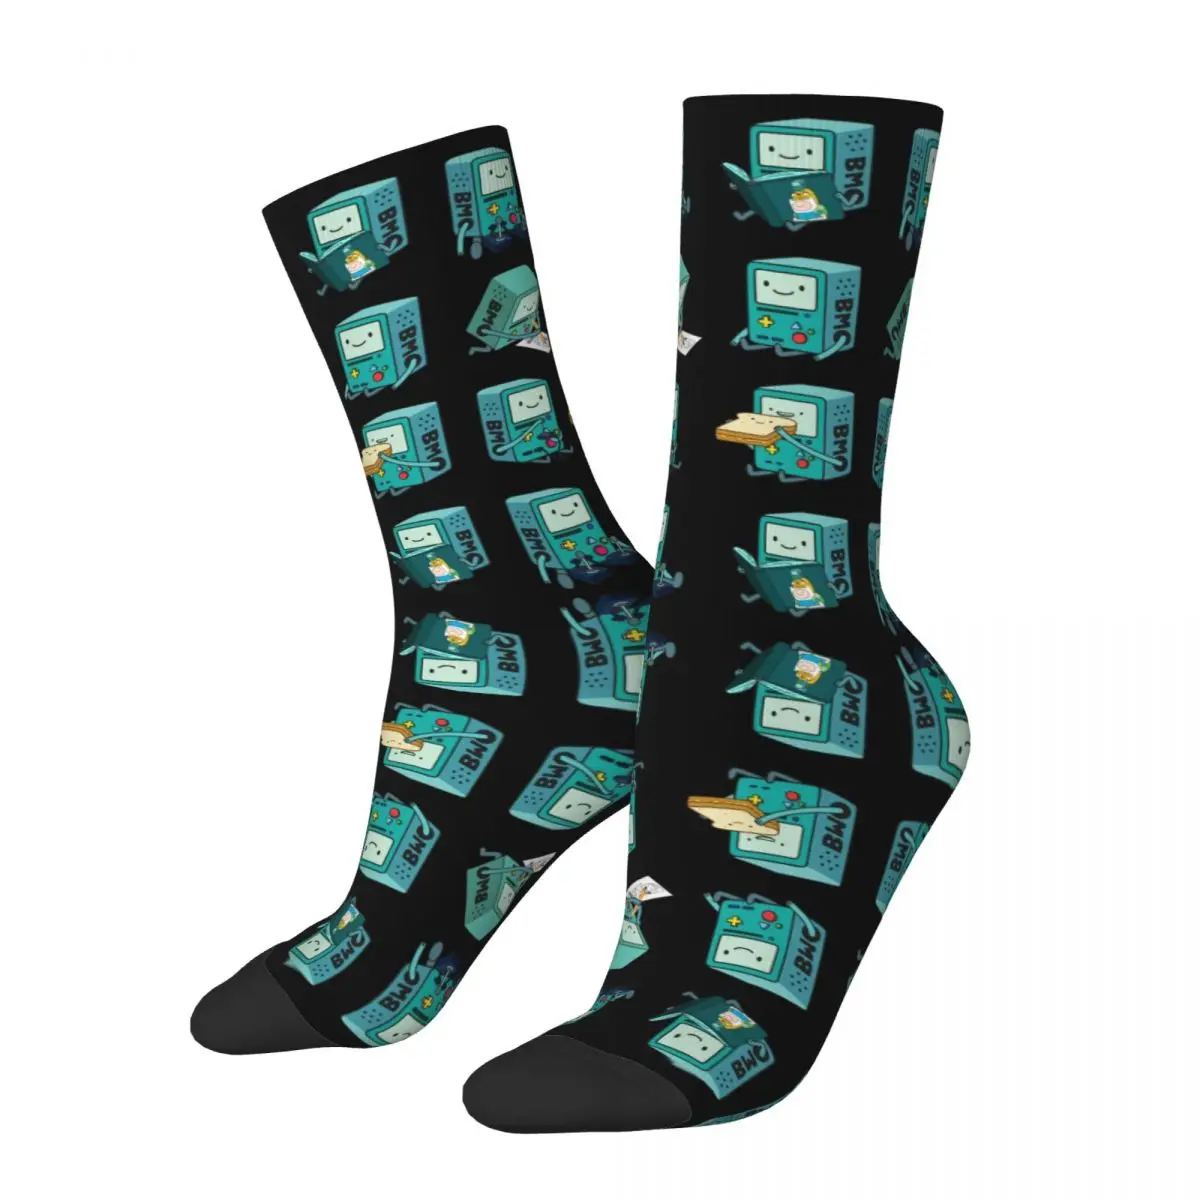 

Finn Jake BMO Socks Harajuku High Quality Stockings All Season Long Socks Accessories for Unisex Gifts